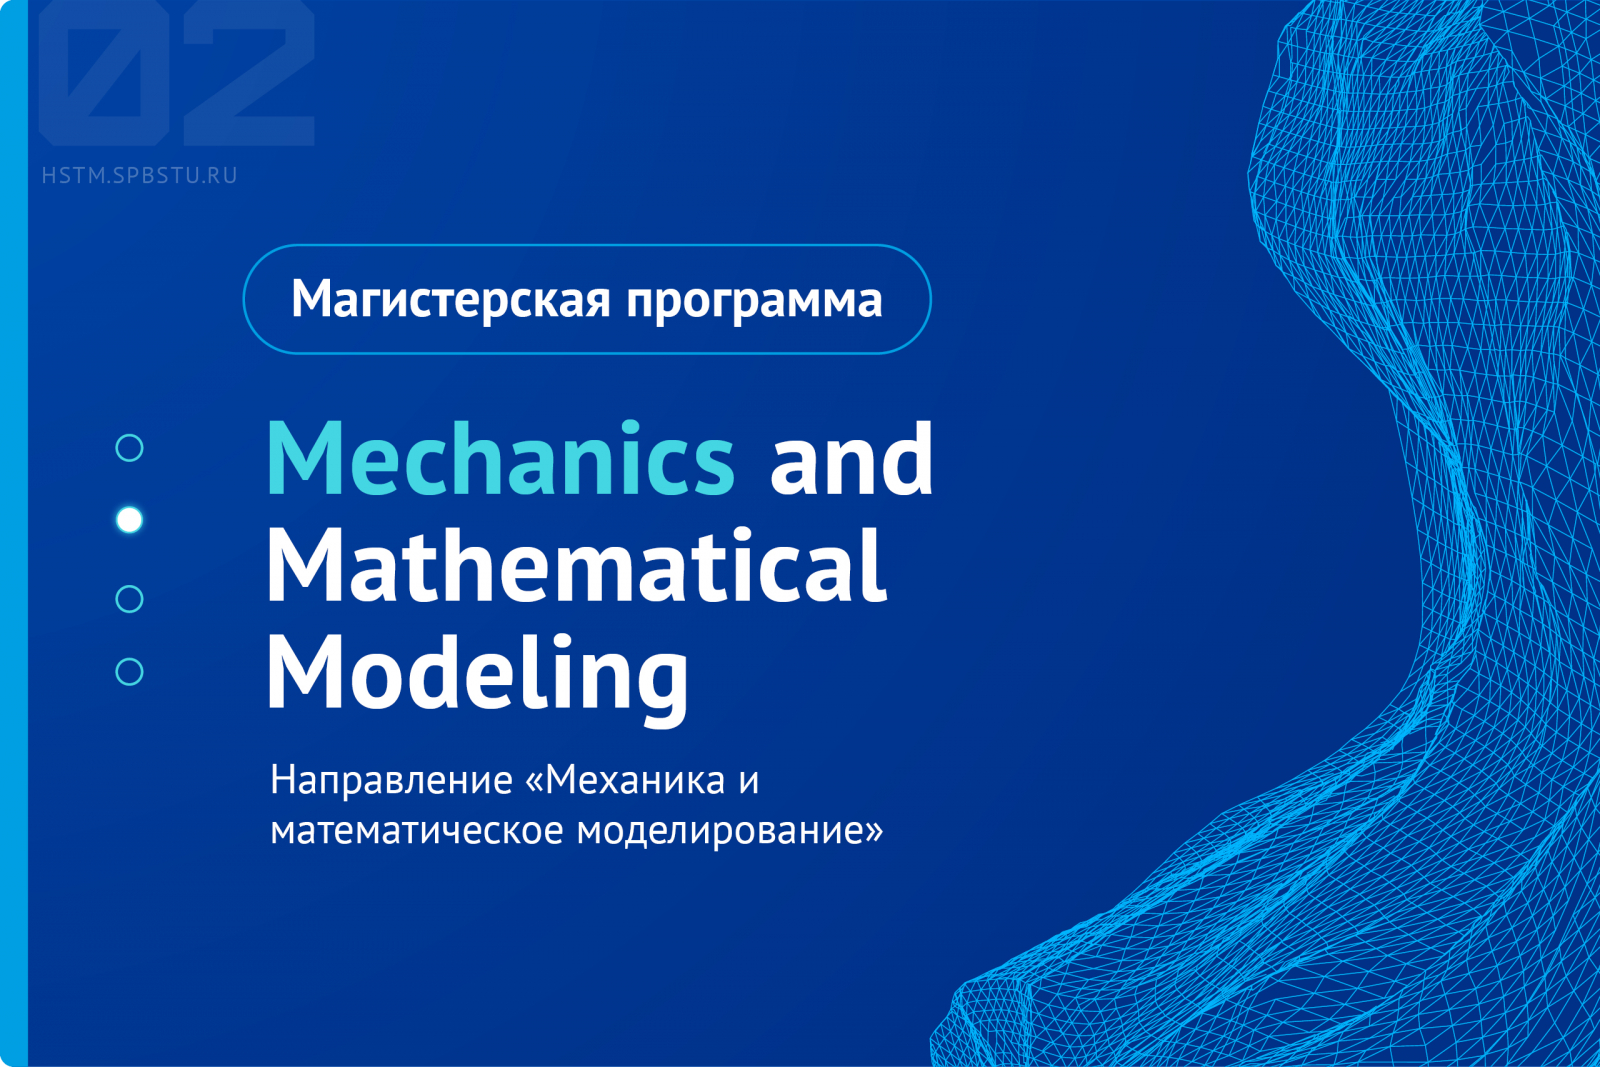 International Master’s degree program “Mechanics and mathematical modeling”